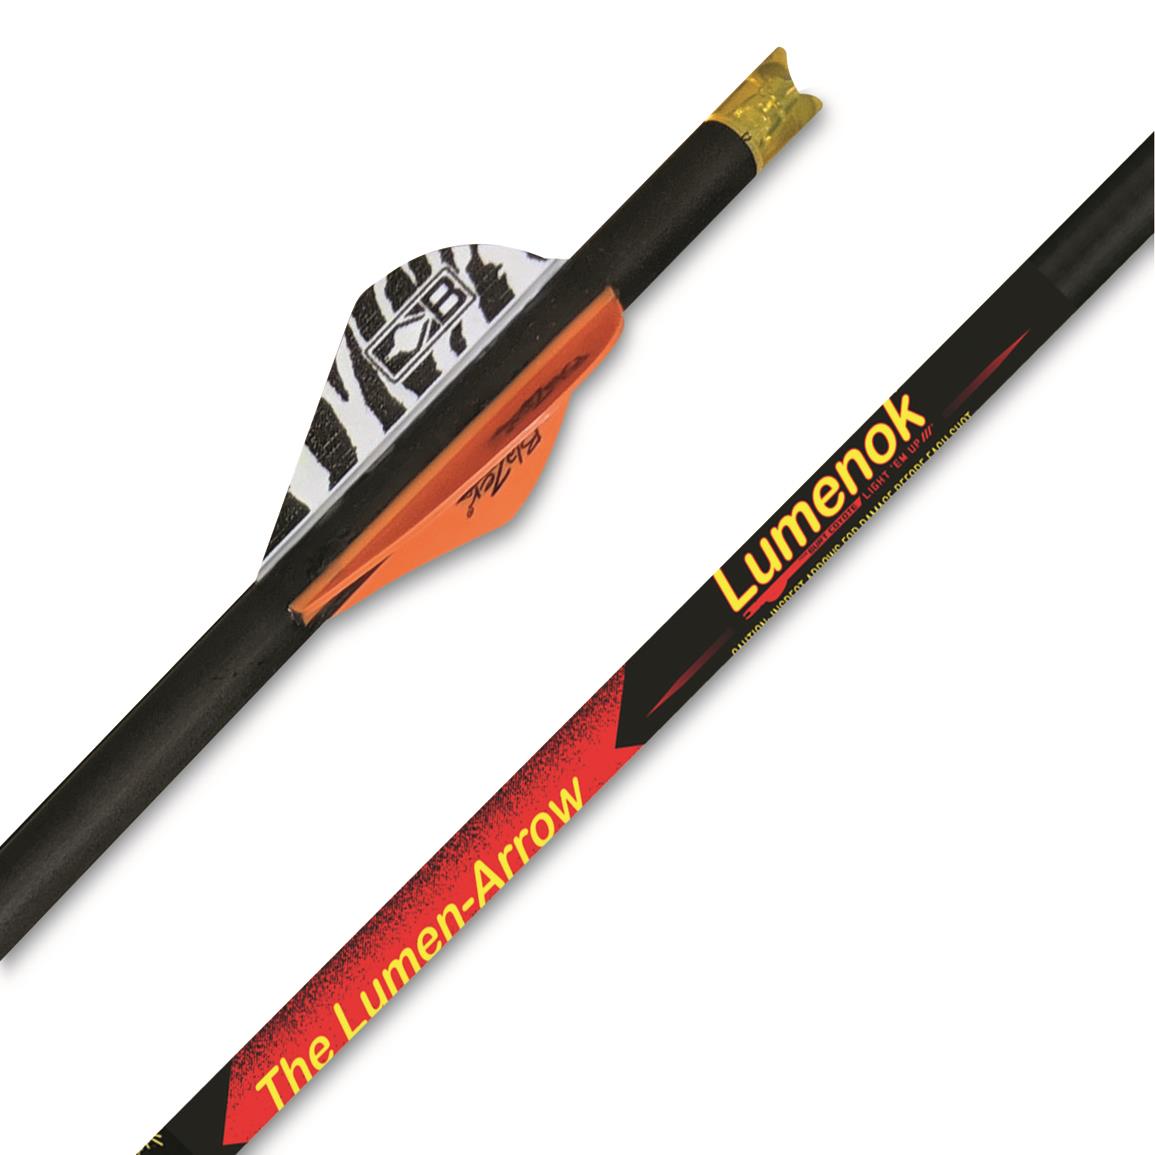 Burt Coyote Lumen-Arrow Crescent 22" Lighted Crossbow Arrows, 335 Grain, HD Orange, 3 Pack, Hd Orange